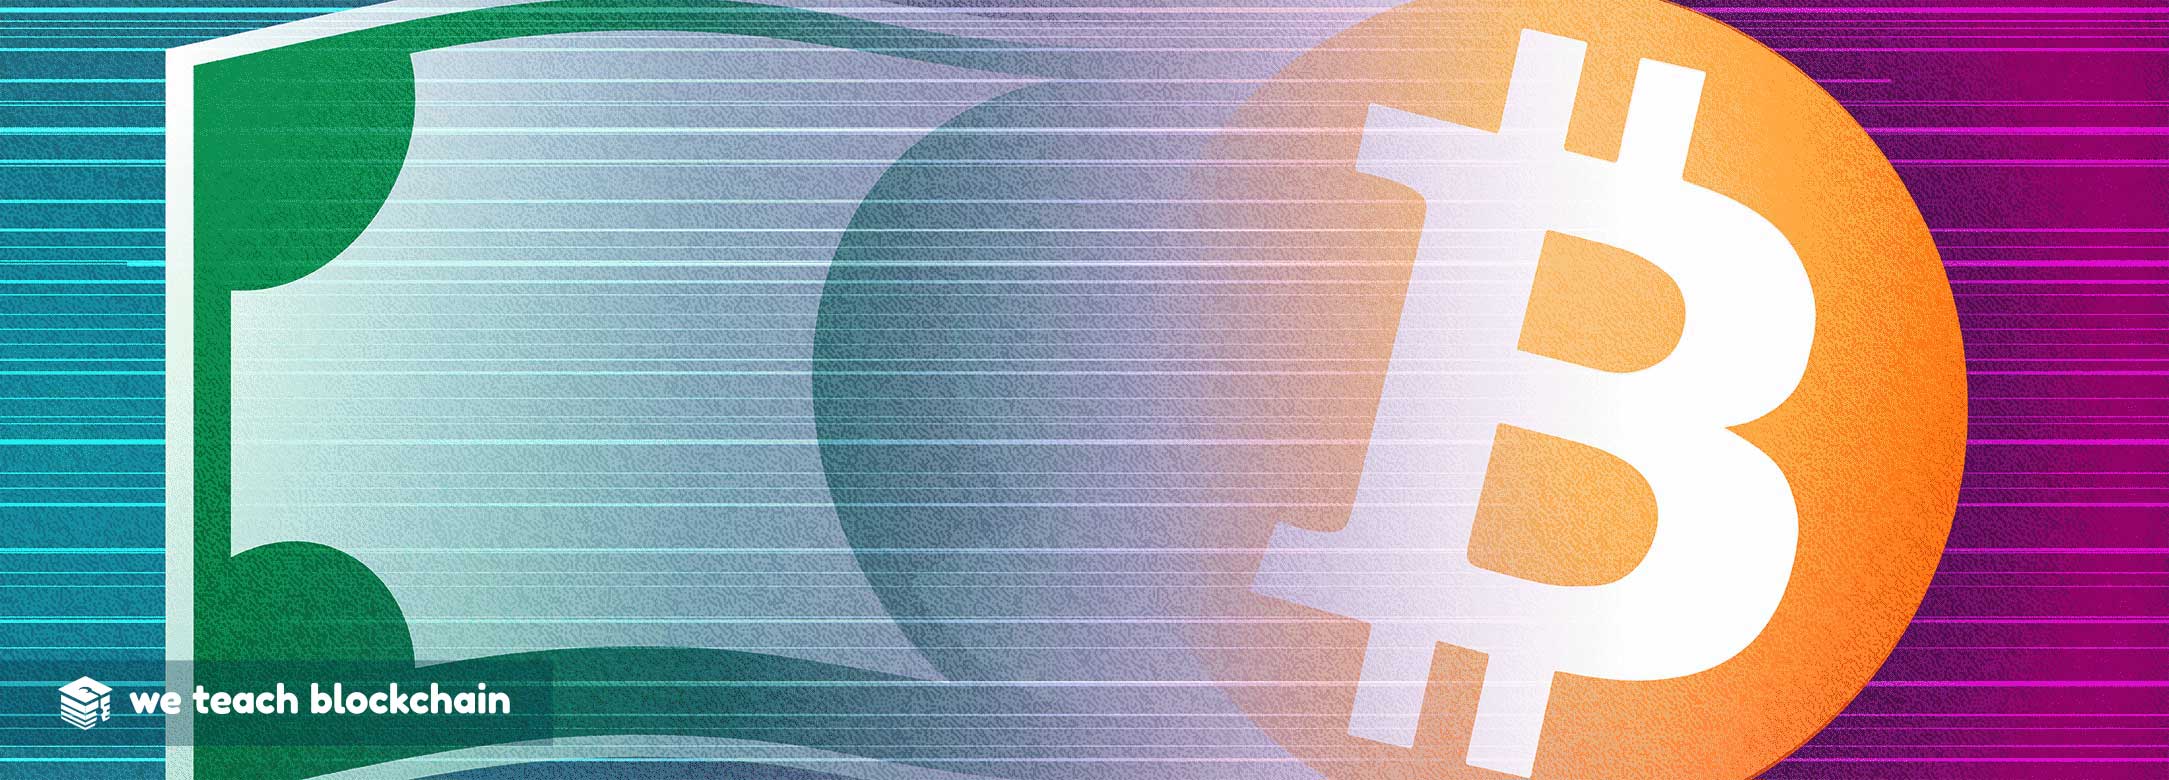 Cash turning into Bitcoin